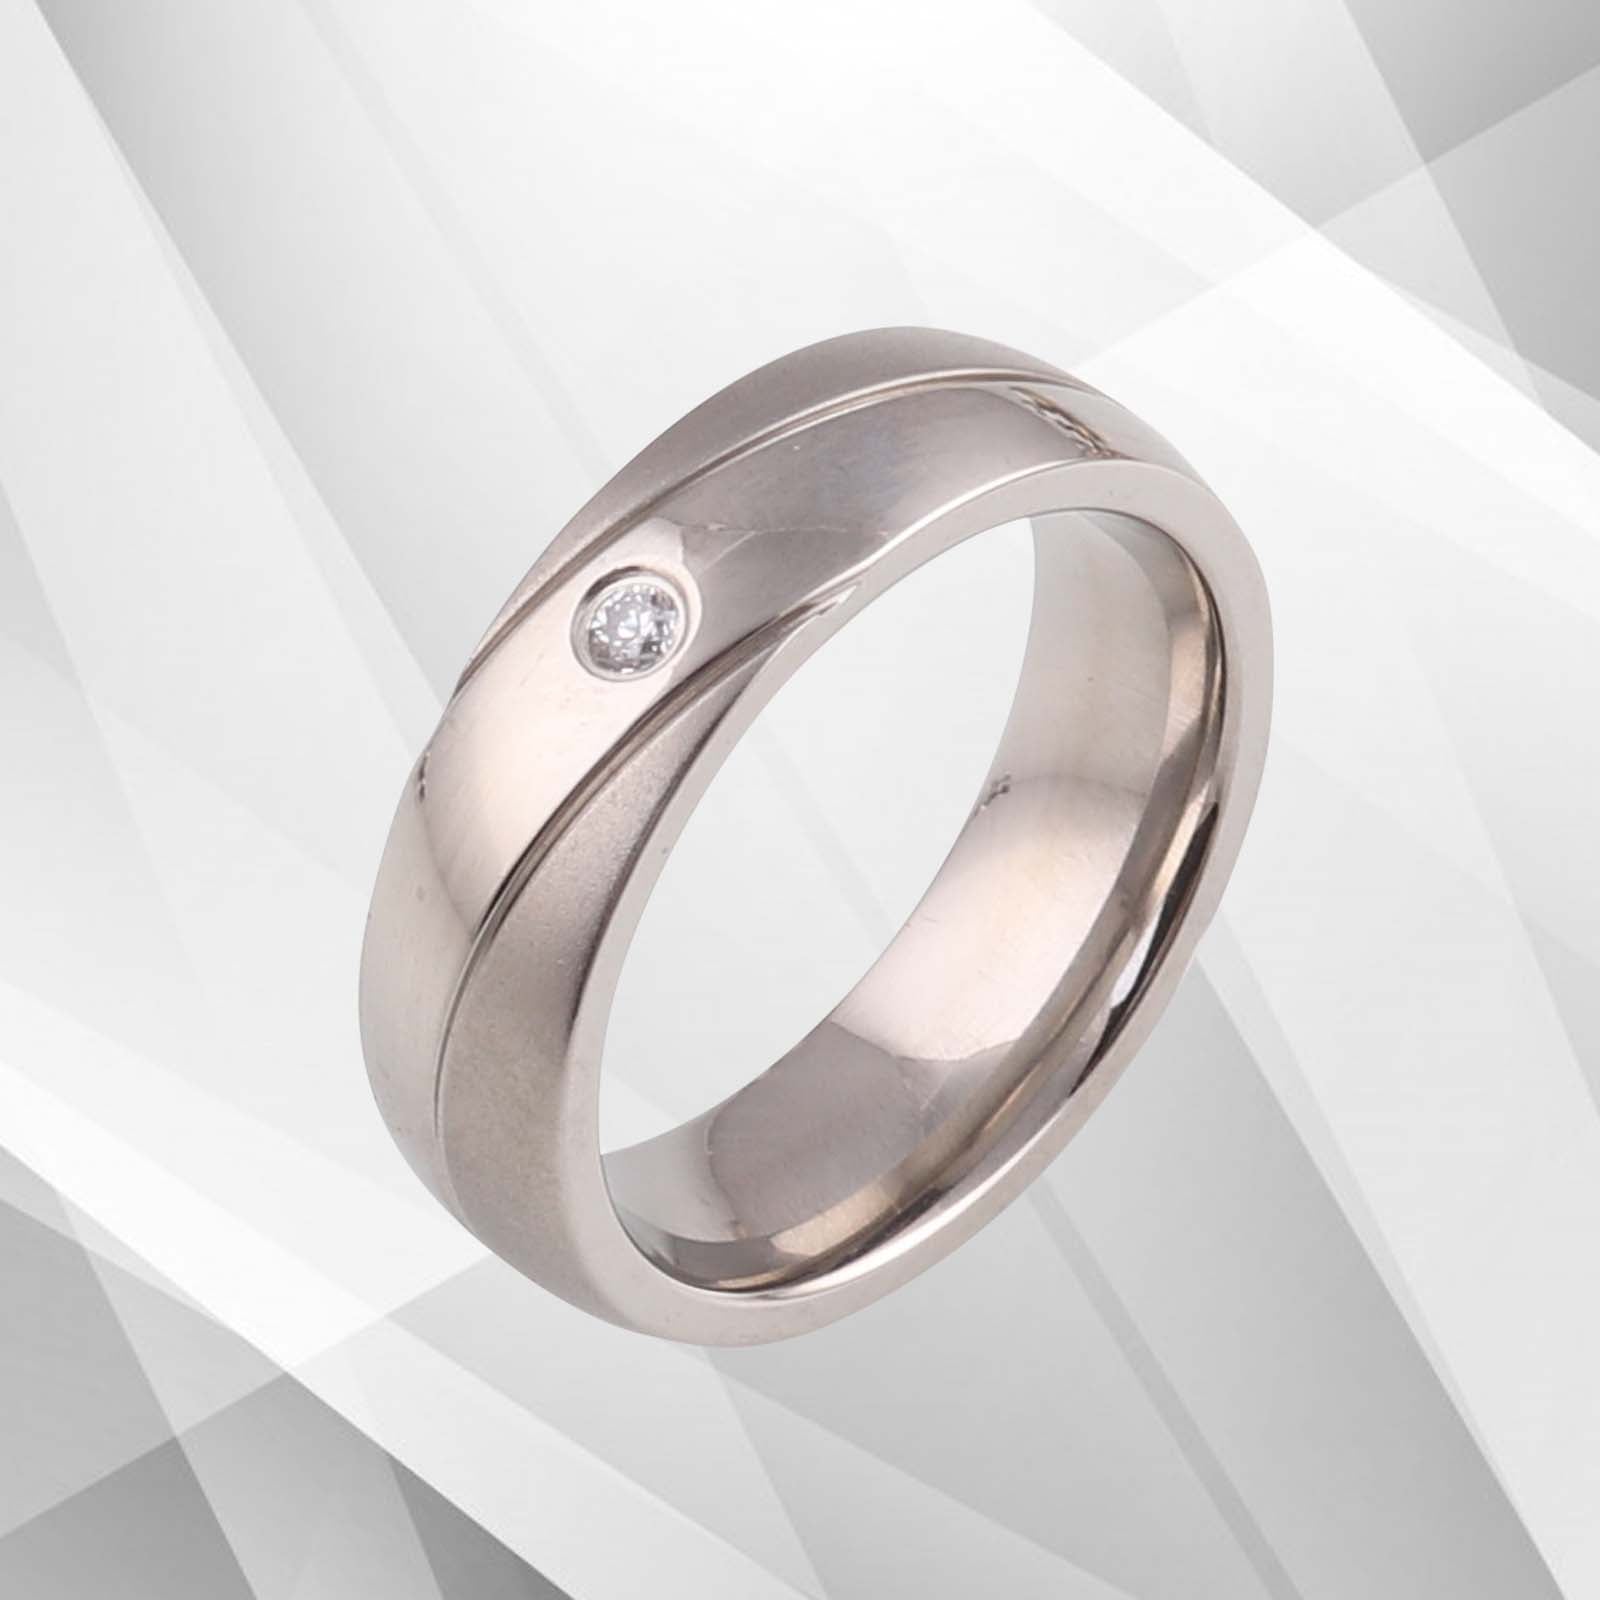 Designer Titanium CZ Diamond Wedding Band Ring - 6mm Wide, Comfort Fit, Sparkling Finish - Women's Anniversary Ring Bijou Her